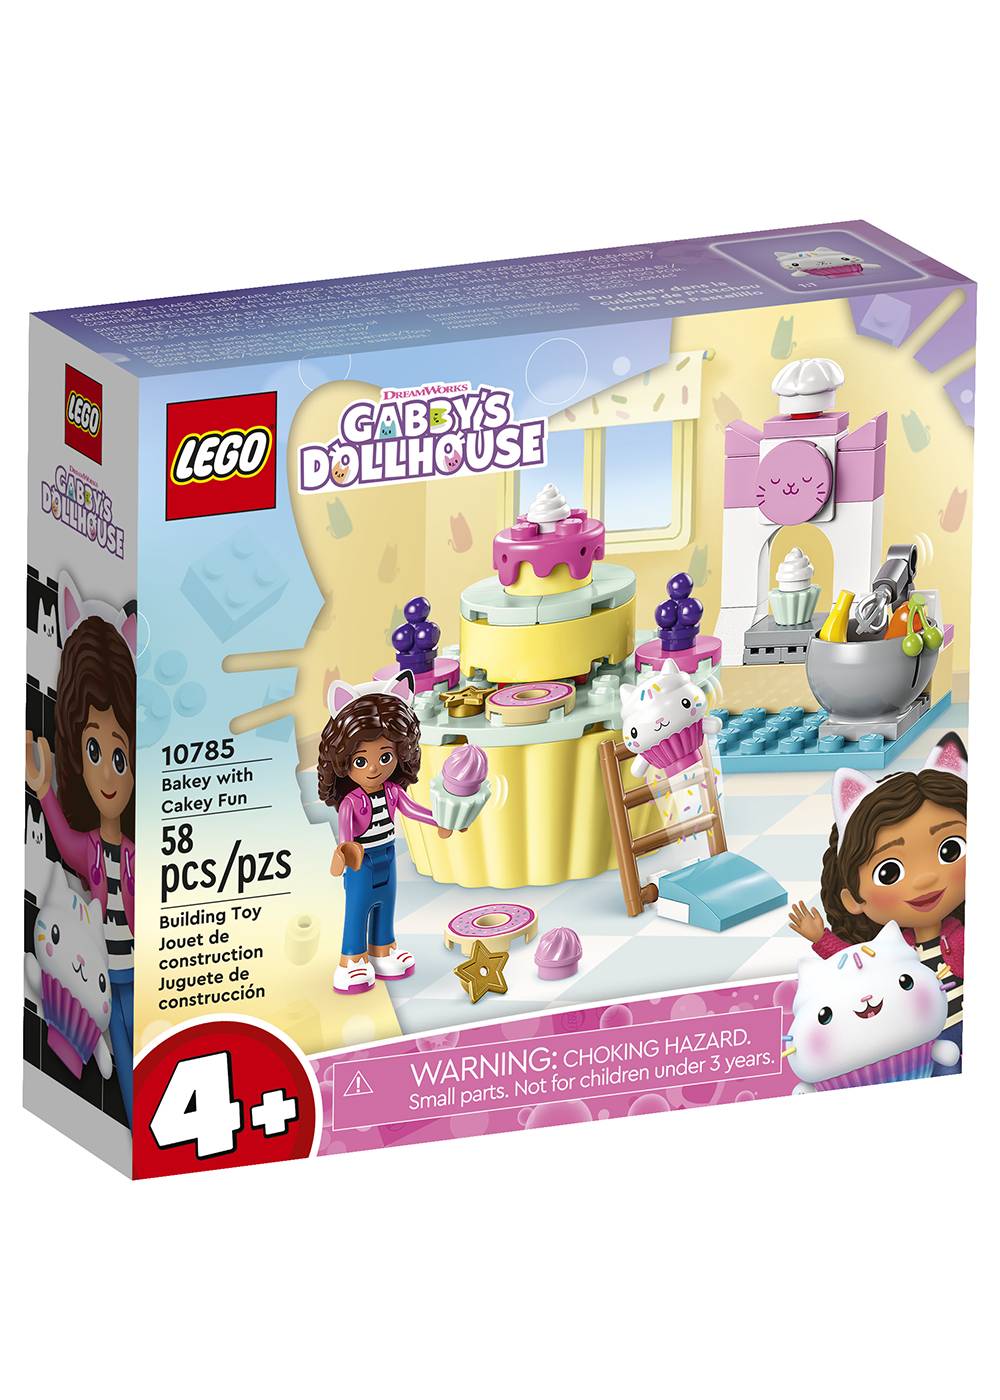 LEGO Gabby's Dollhouse Bakey with Cakey Fun Set; image 2 of 2